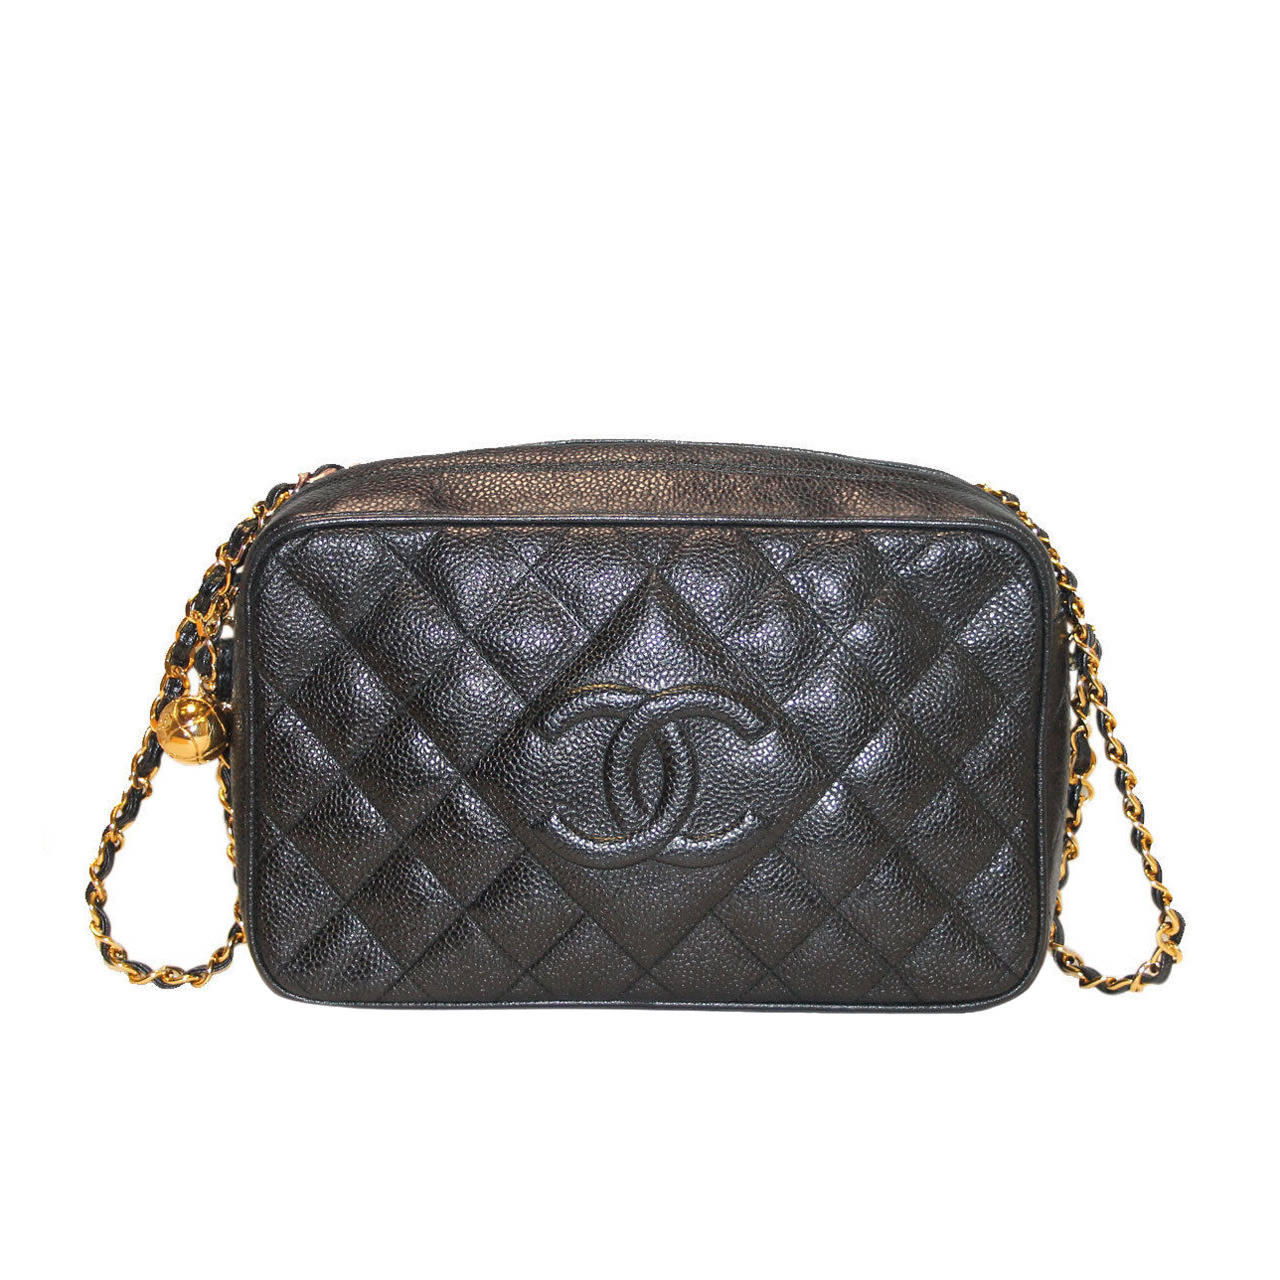 Chanel Black Caviar Gold Hardware Camera Shoulder Bag Purse in Box